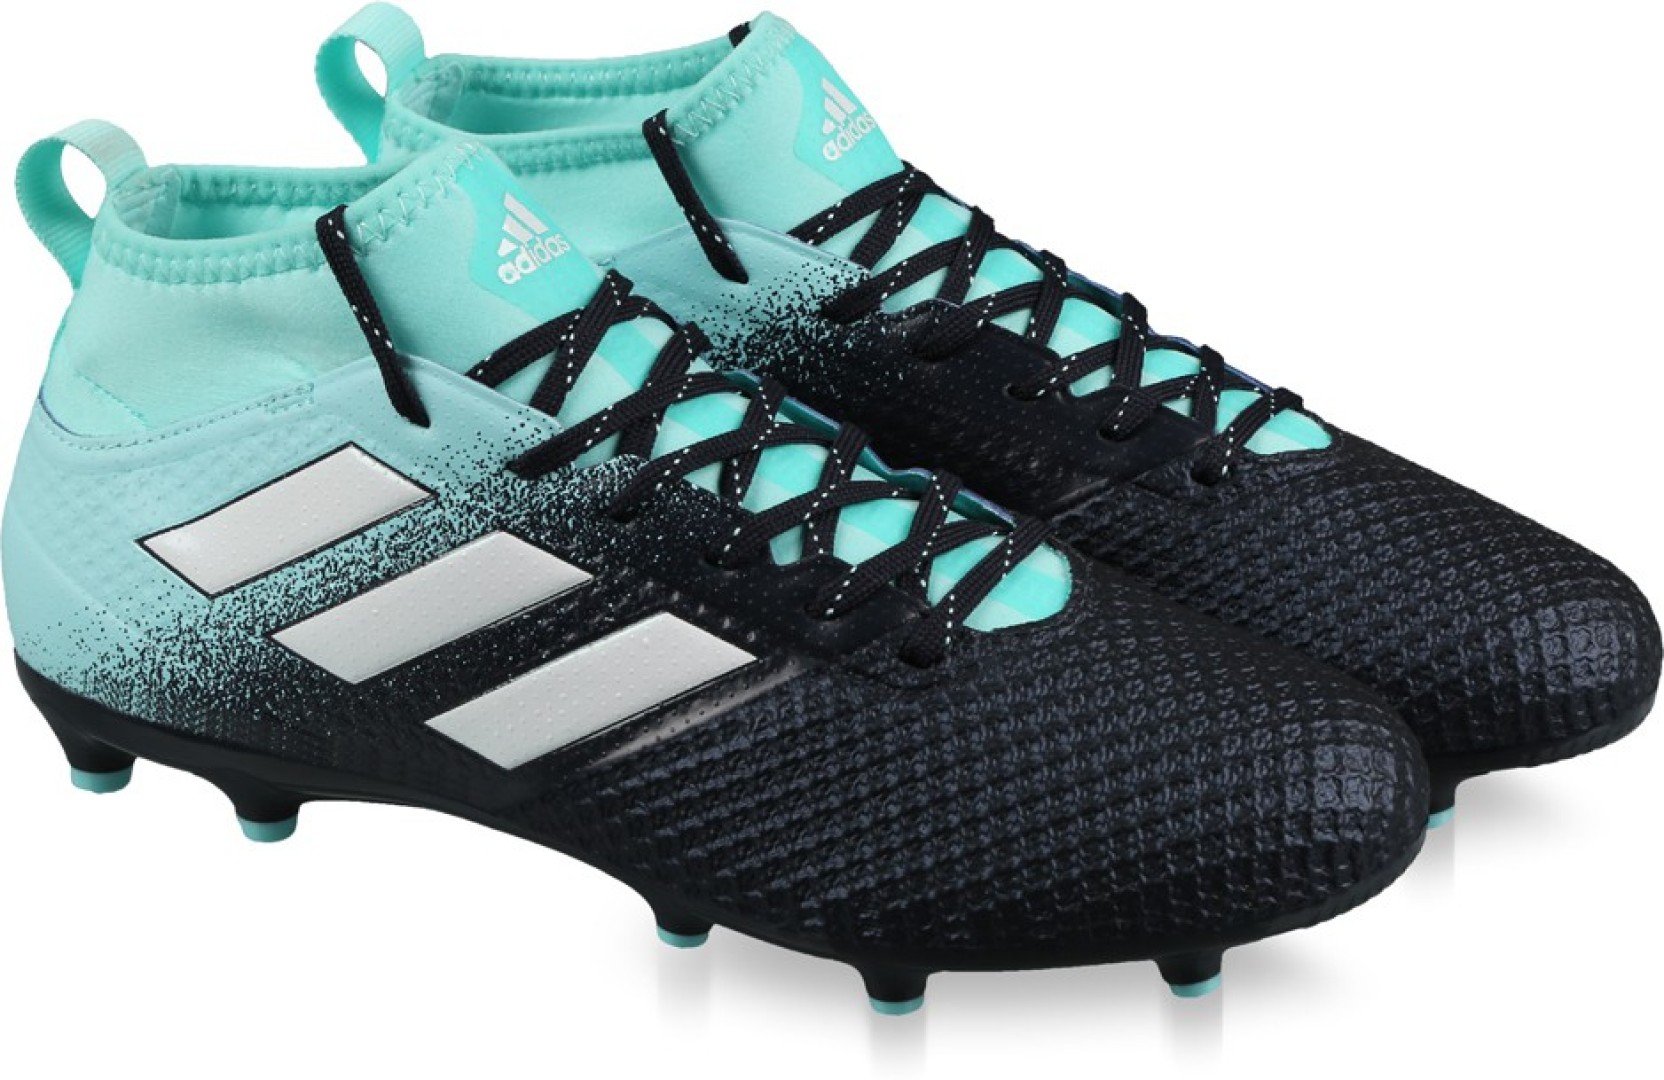 Adidas ACE 17.3 FG Football Shoes - Buy ENEAQU/FTWWHT/LEGINK Color ...